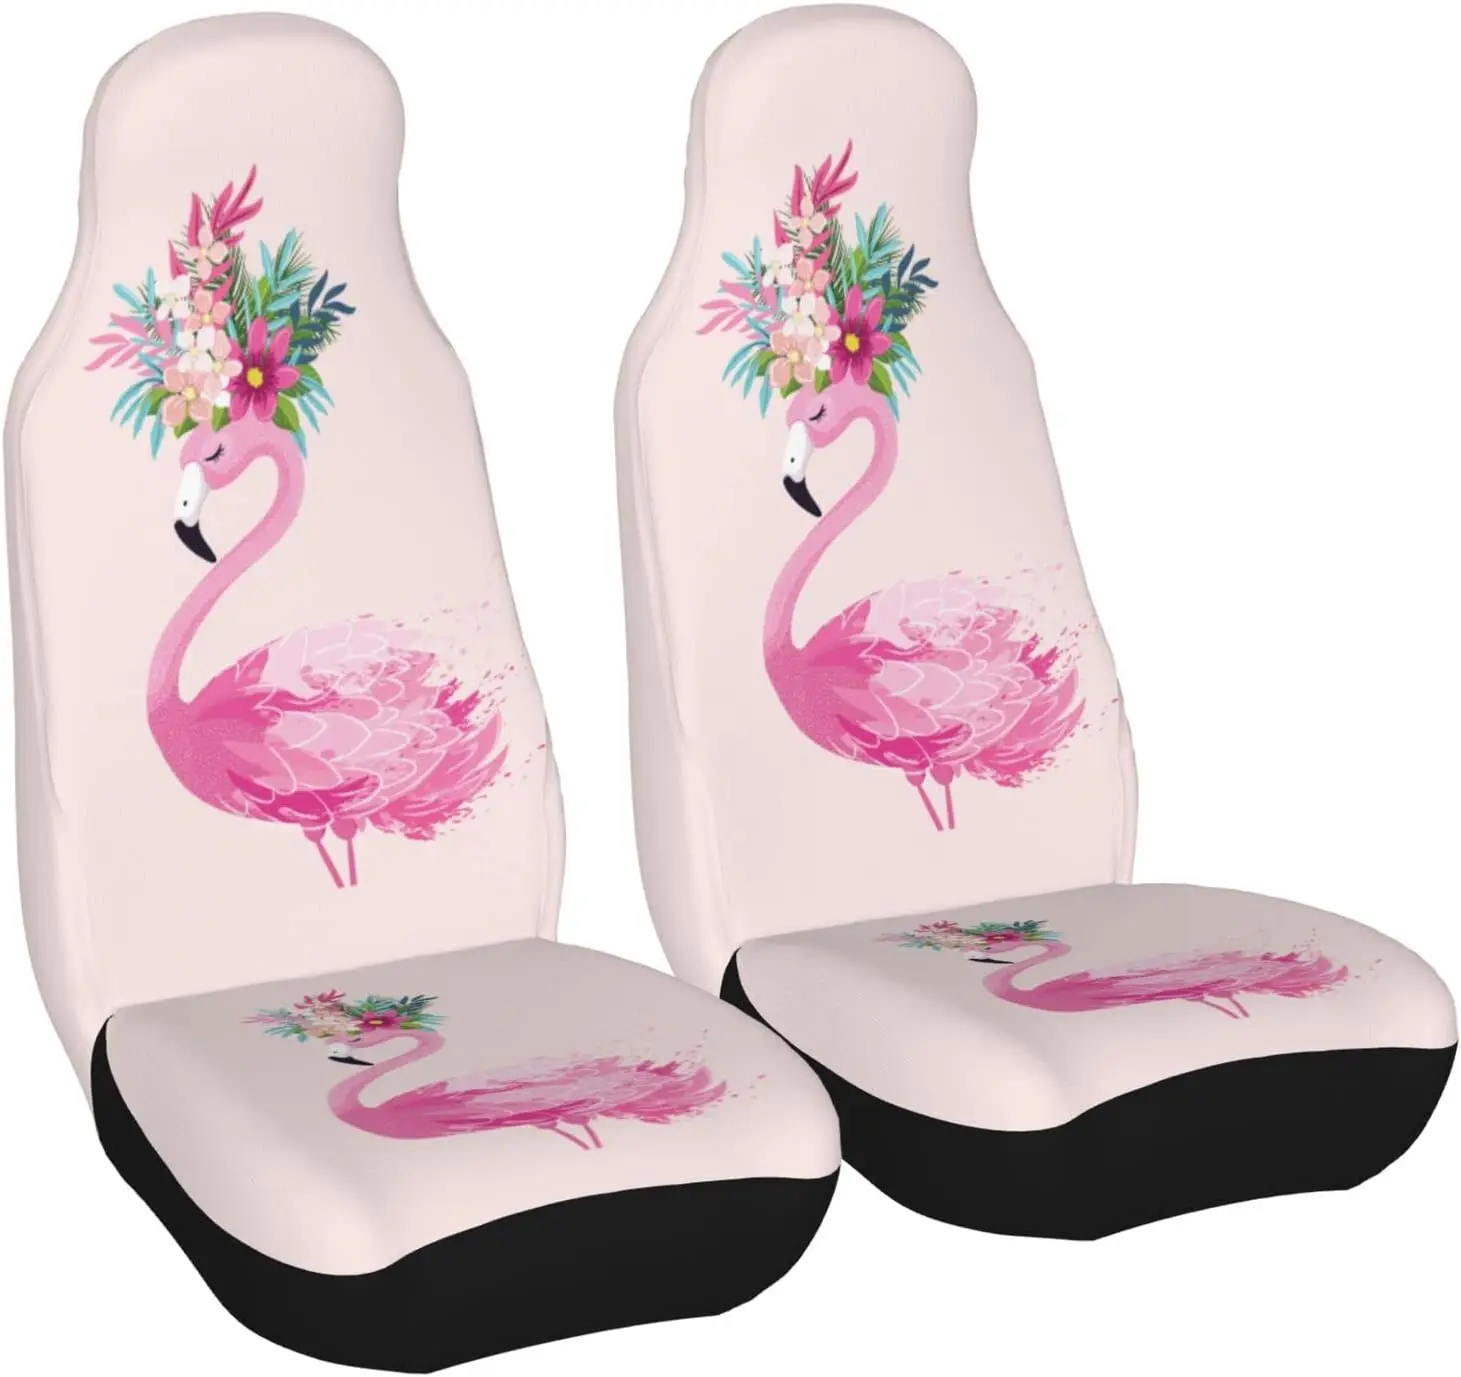 

Car Seat Covers 2pcs Cute Flamingo Universal Front Car Seats Vehicle Enterior Protector Suitable Fits Most Car Auto Sedan Truck